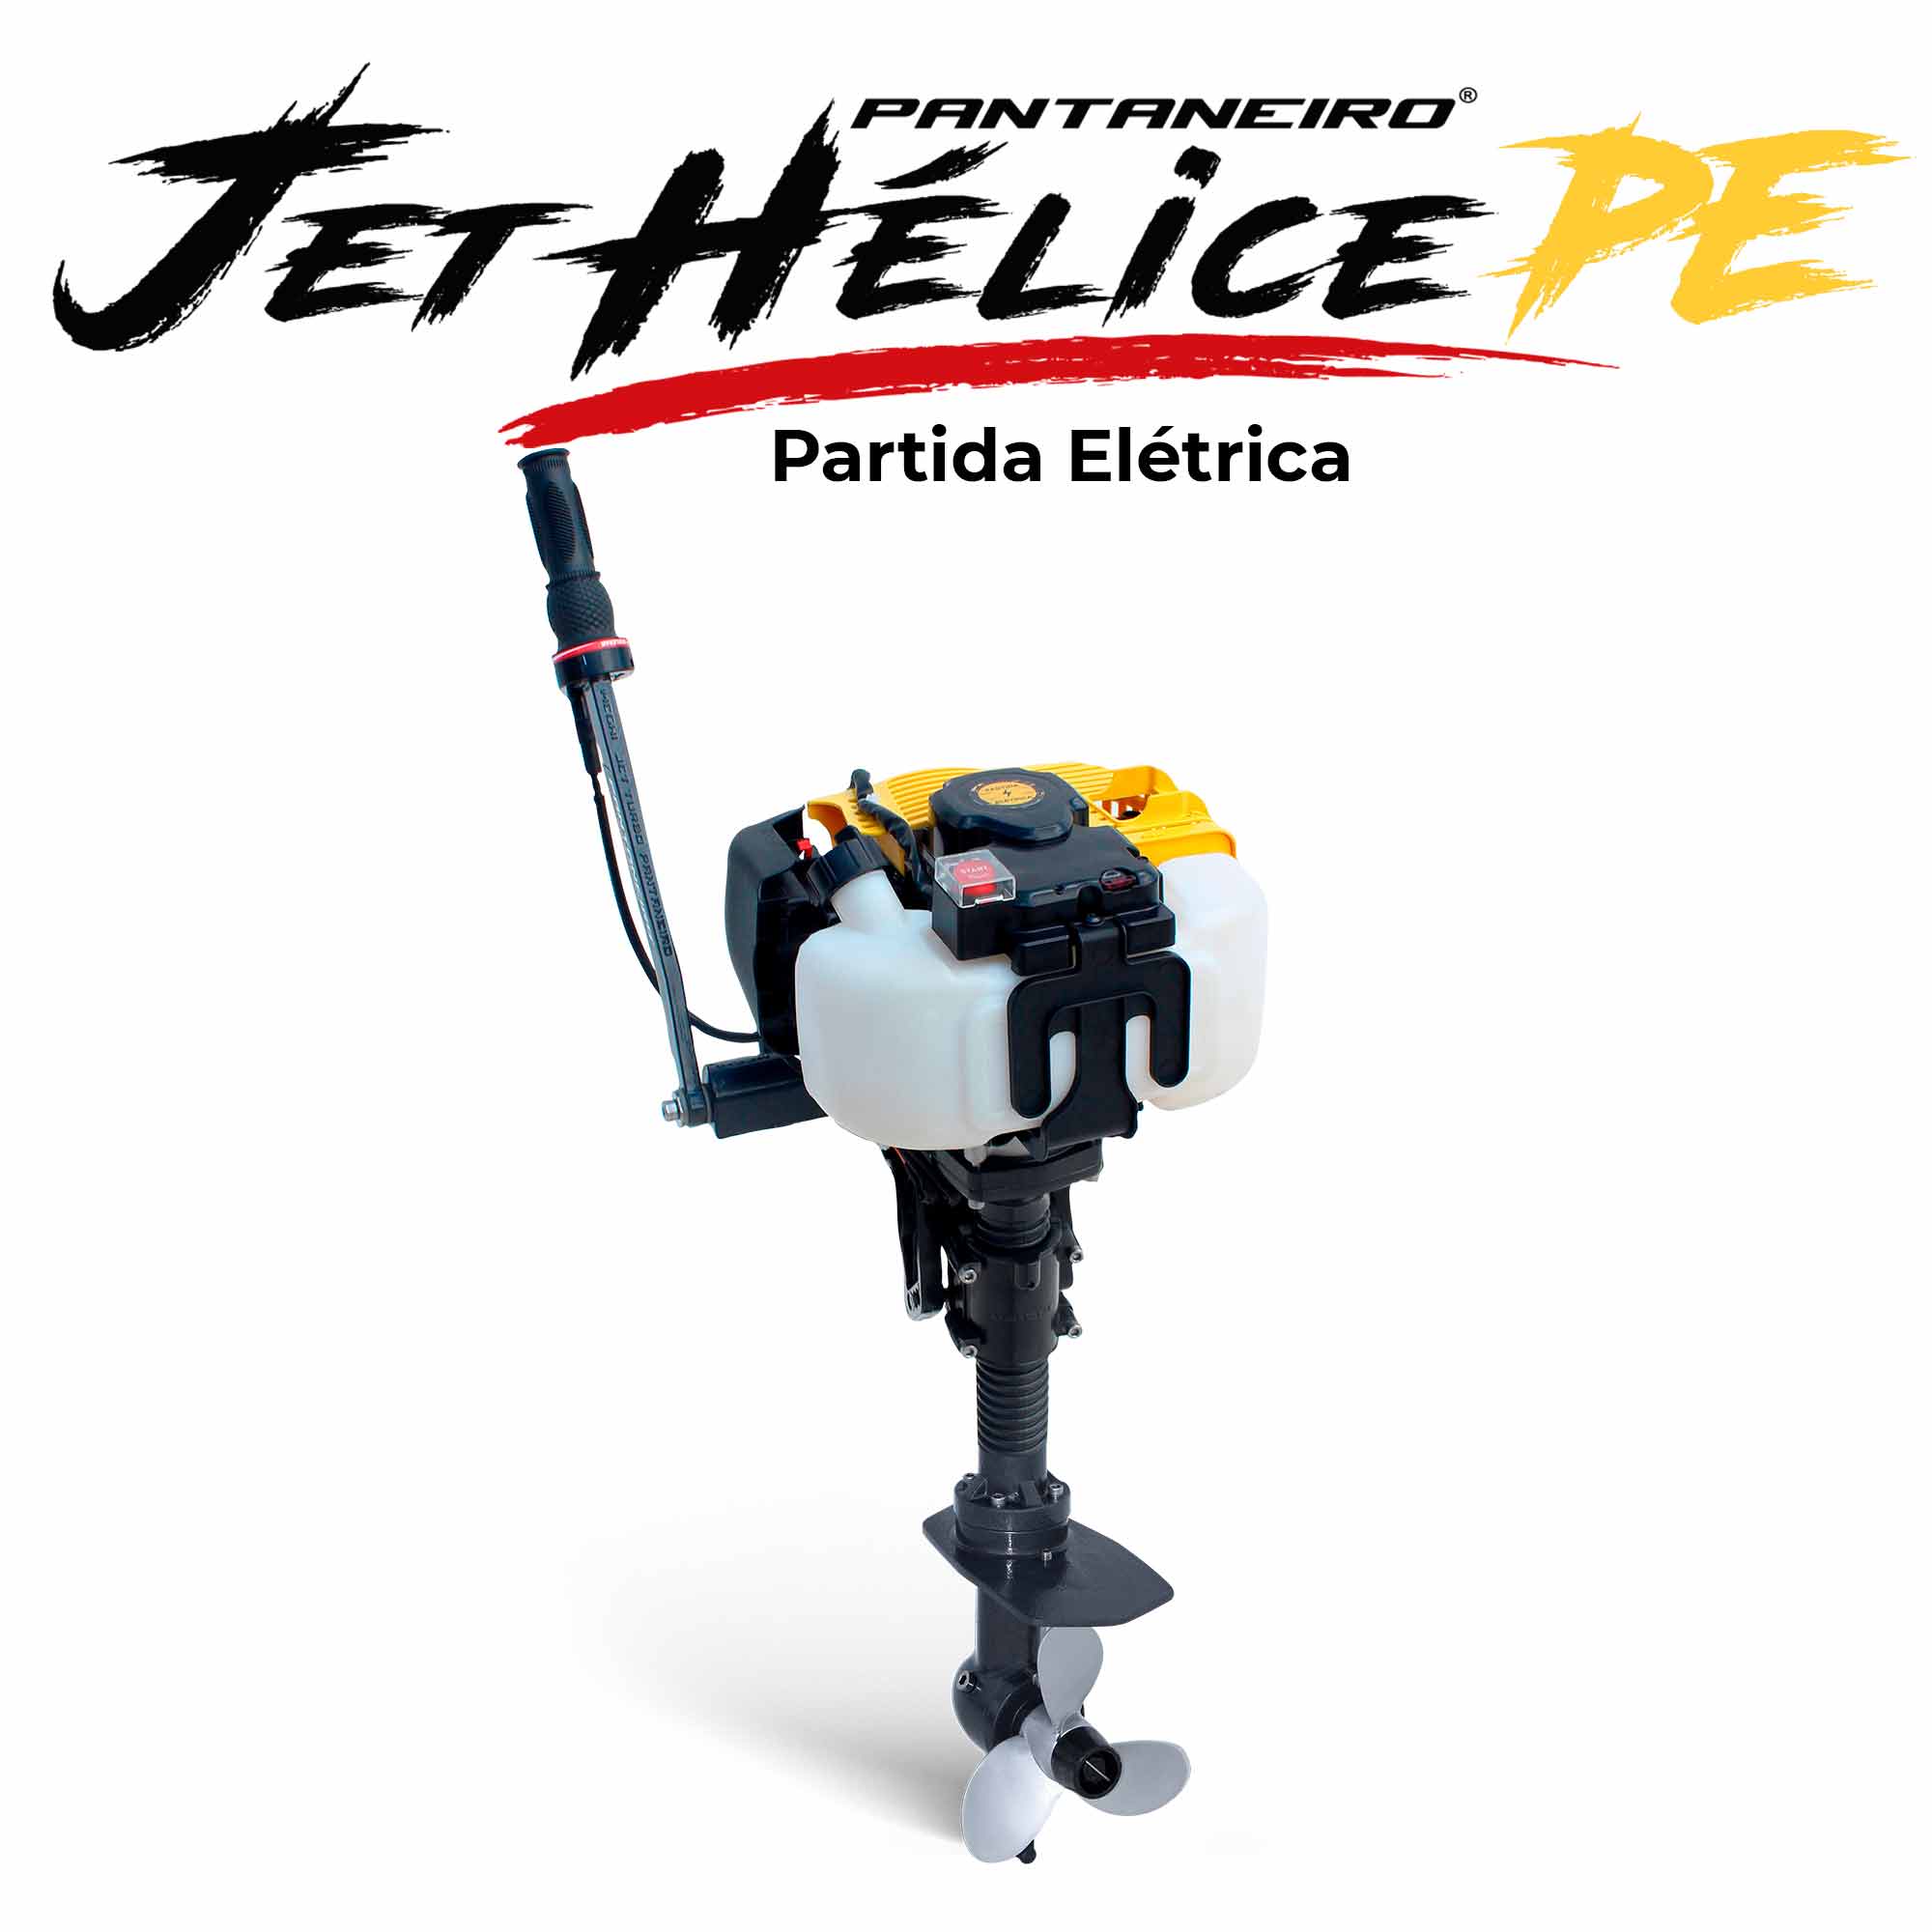 Motor De Popa Jet Hélice Pe (partida Elétrica) 3HP - 4751-0104